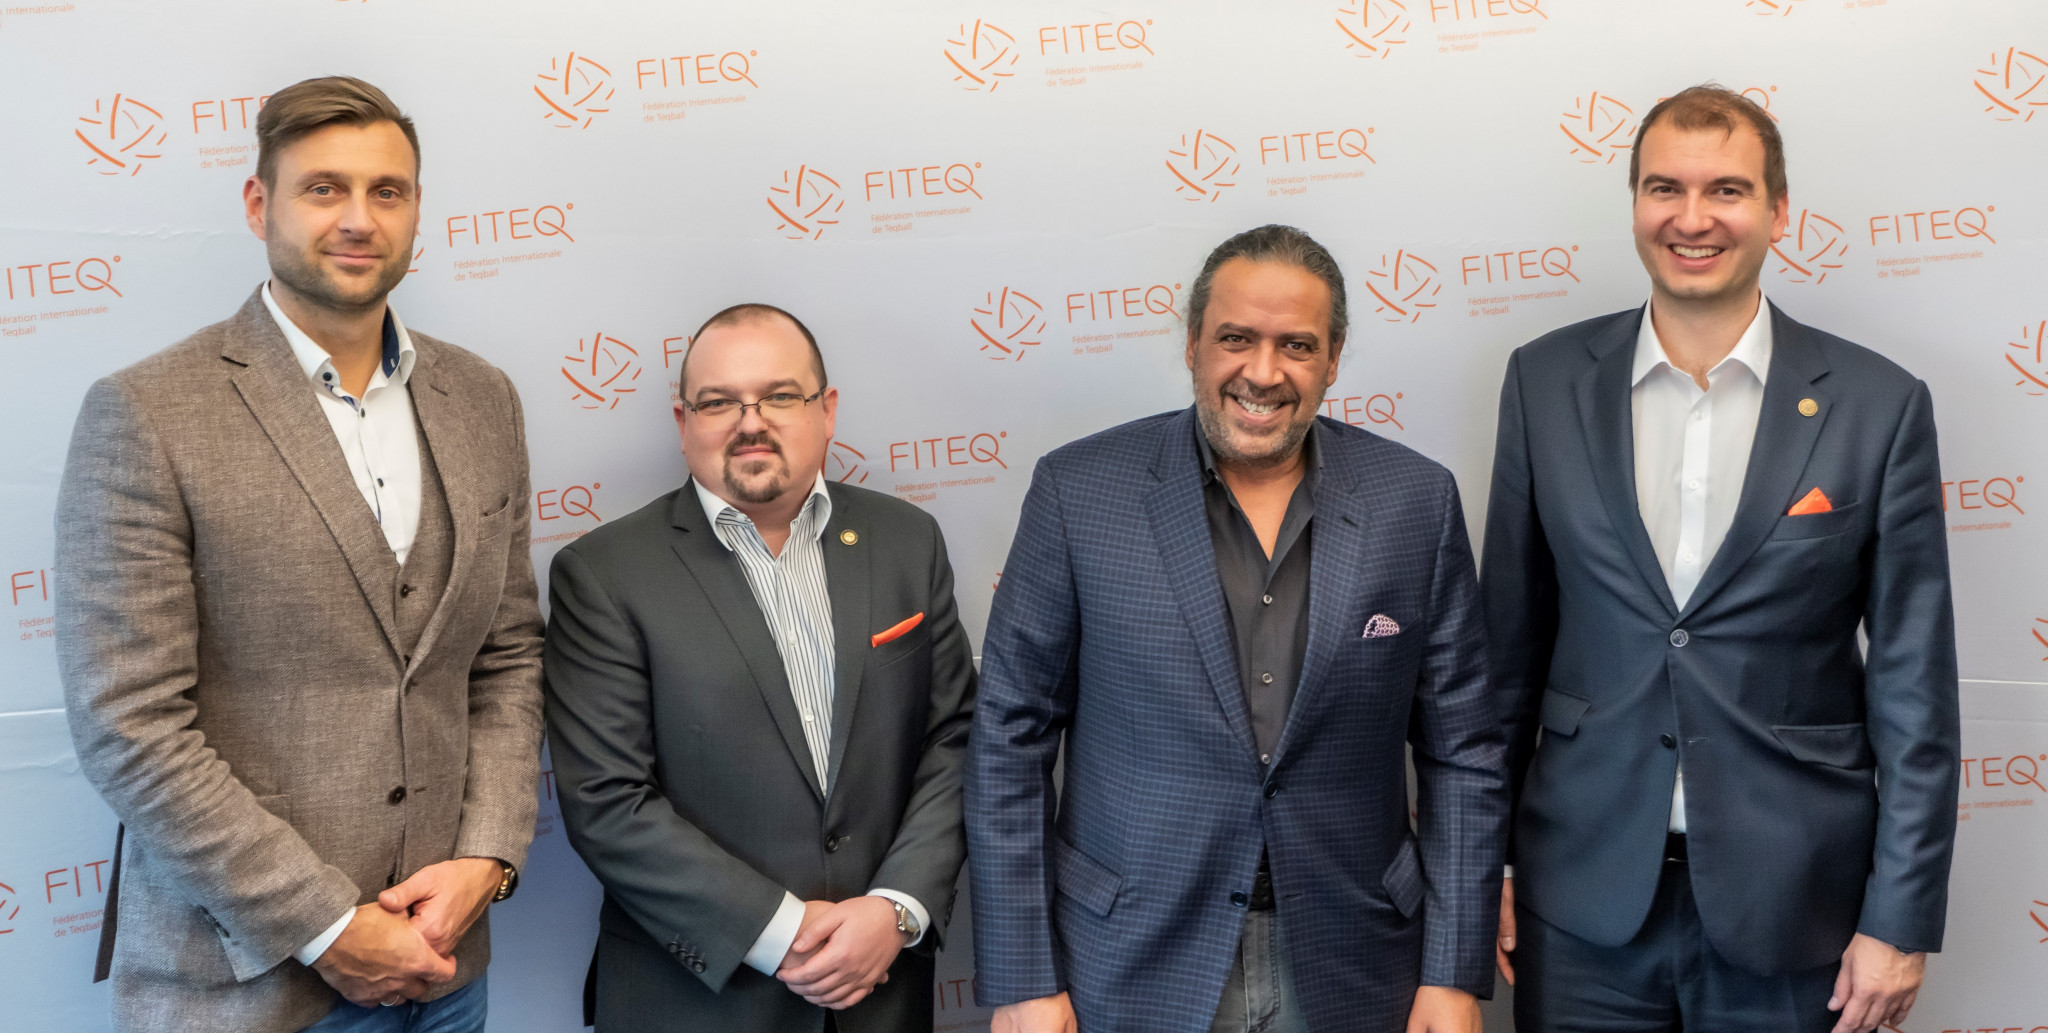 OCA President Sheikh Ahmad visits FITEQ headquarters in Budapest